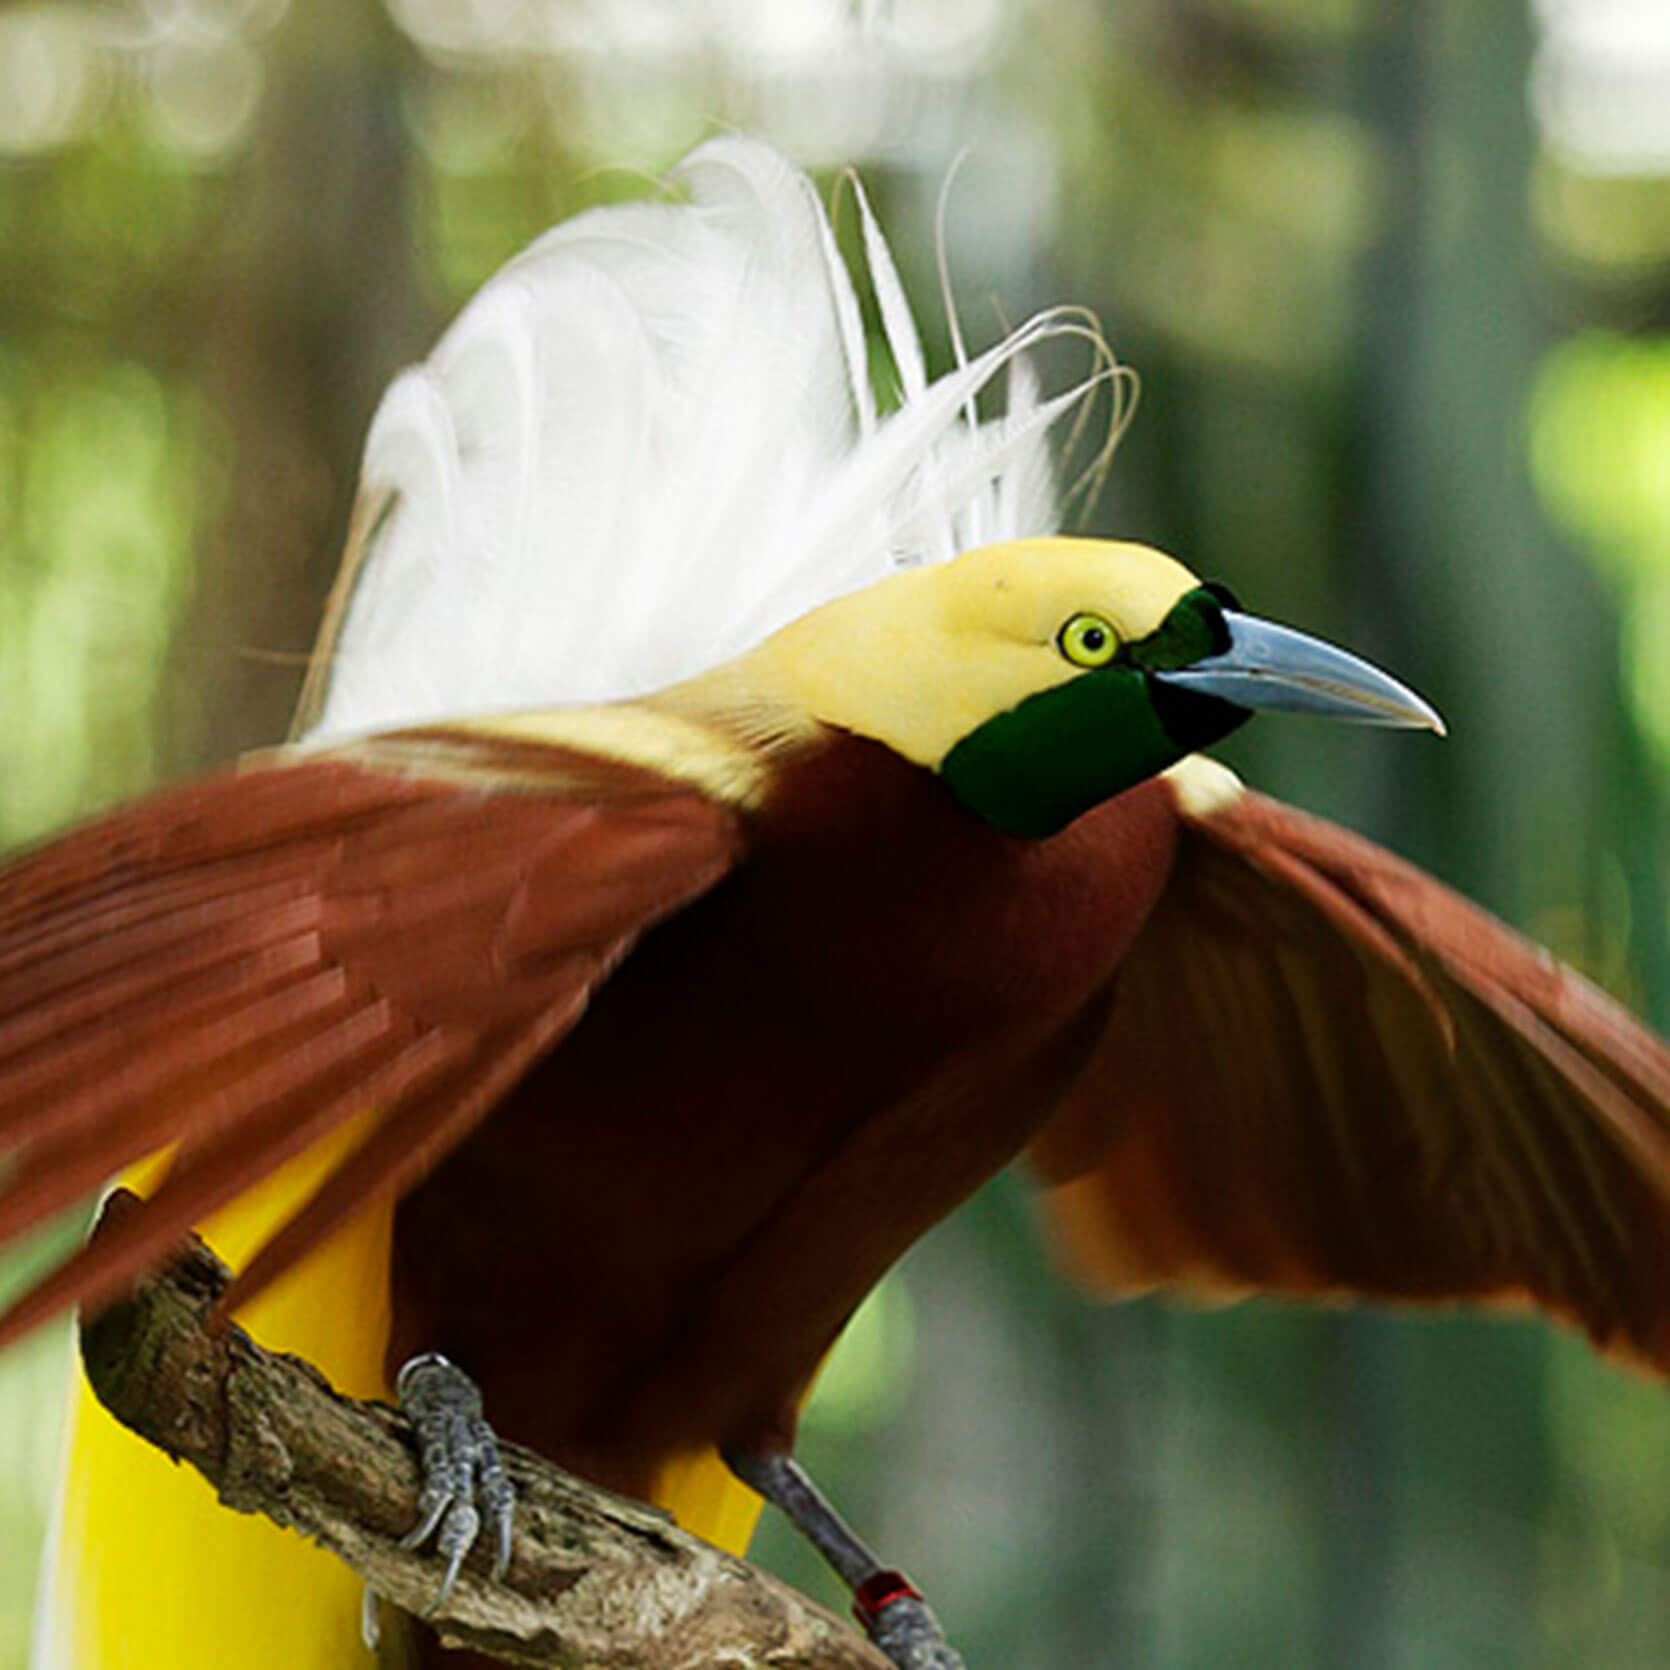 Gallery Photos of "Birds Of Paradise Jurong Bird Park Wildlife Reserve...